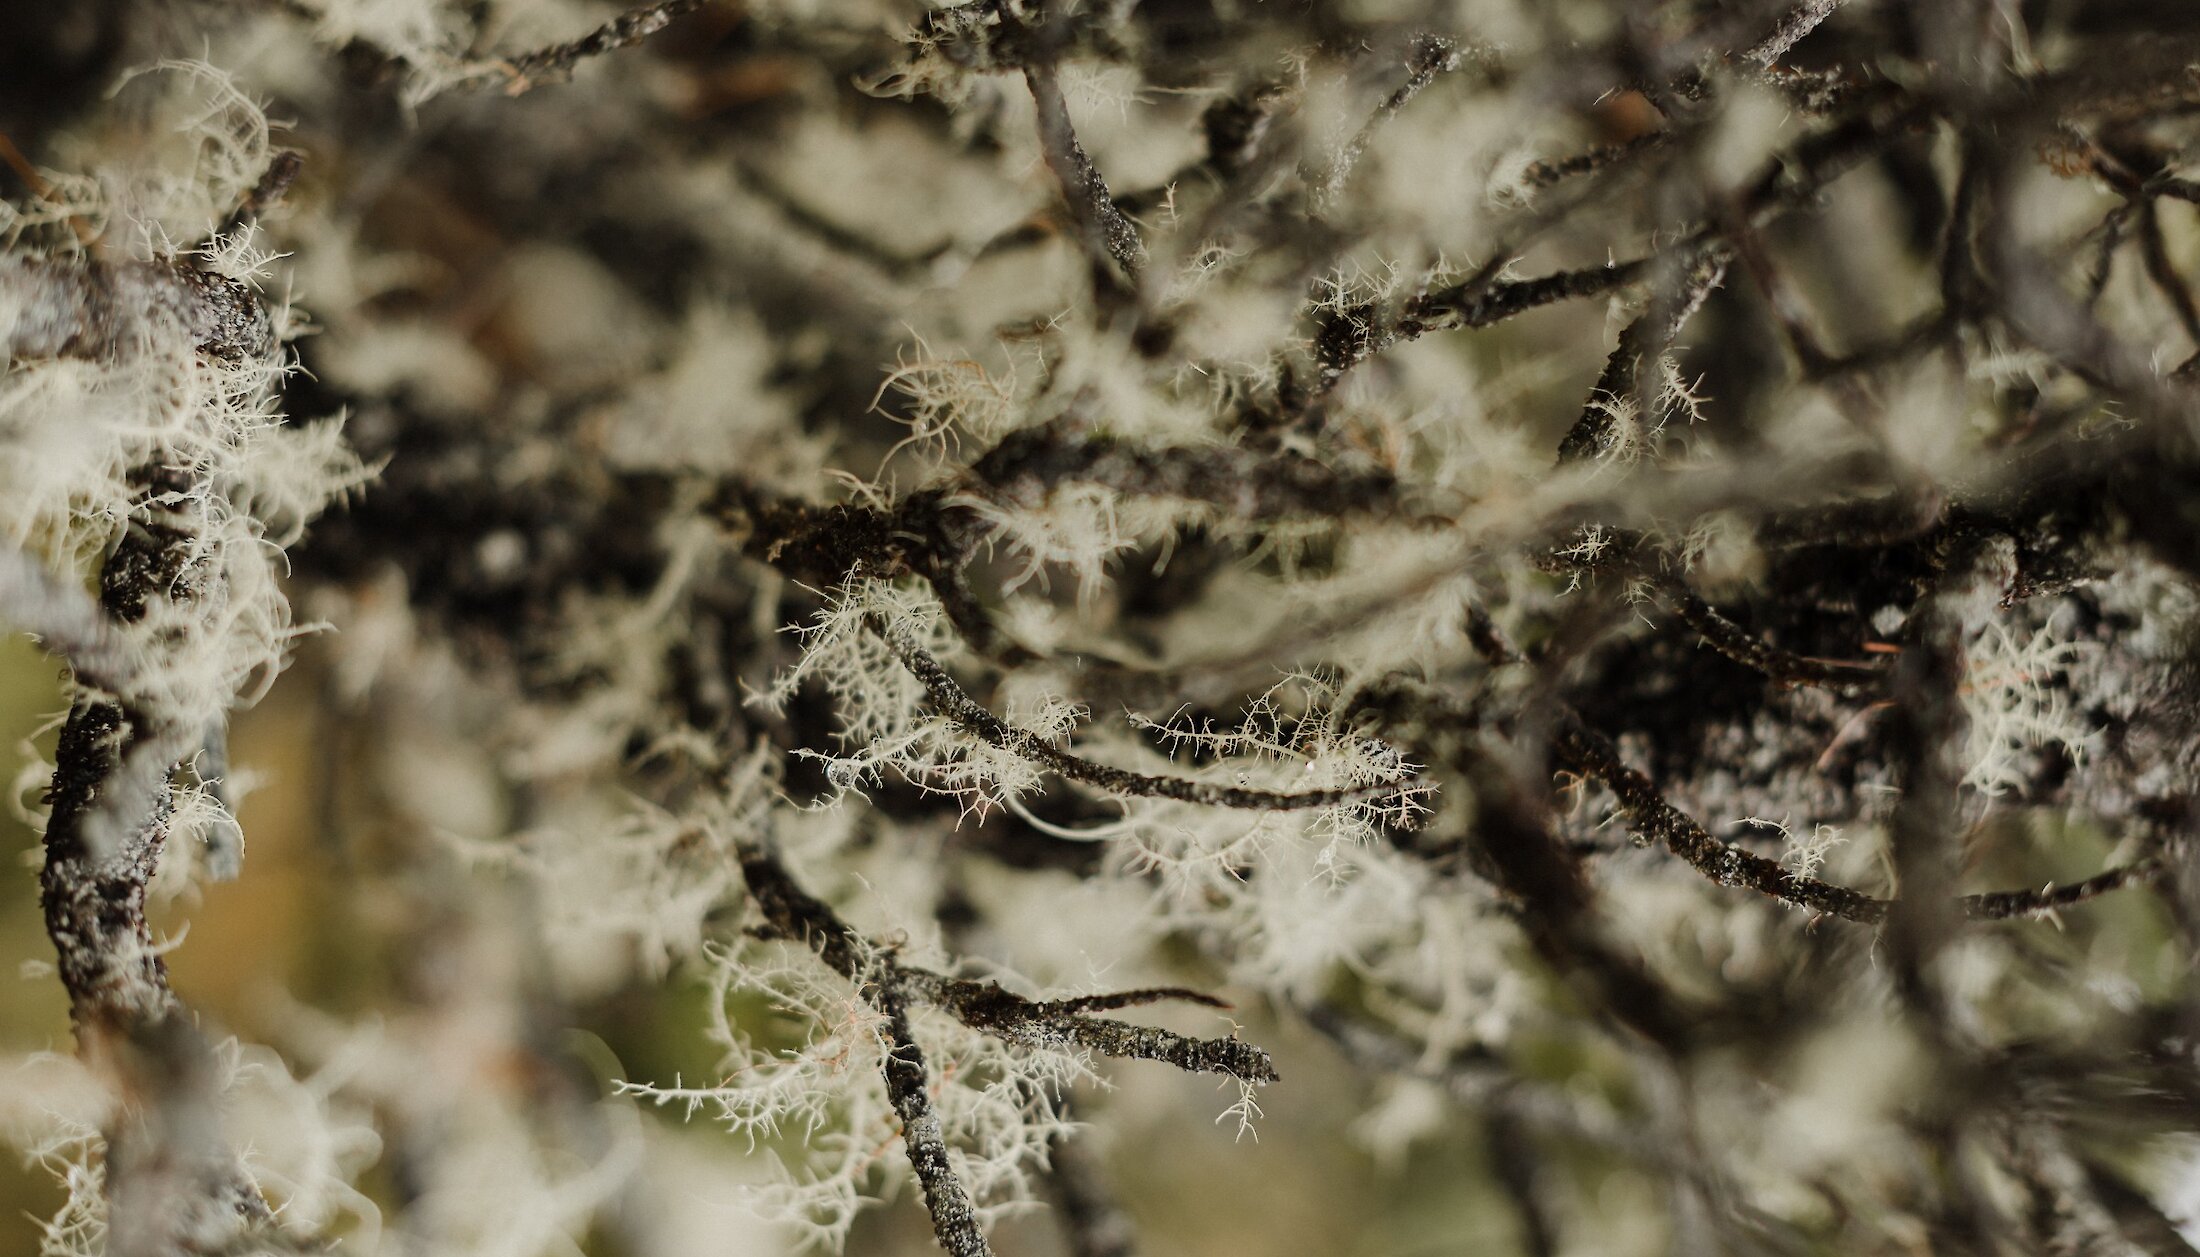 Delicate lichens on branches